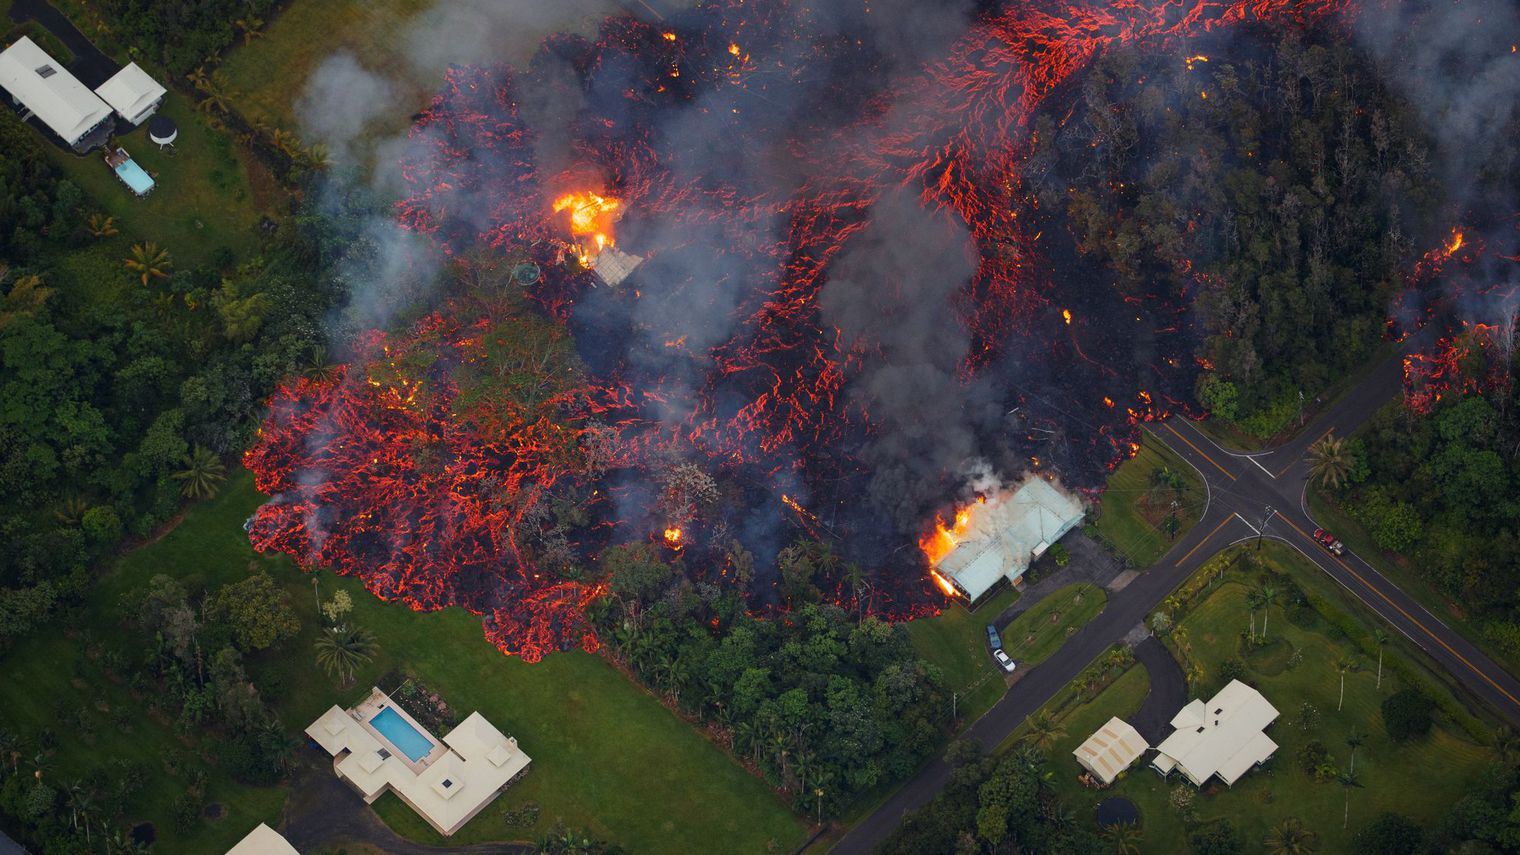 Nom : hawaii-s-kilauea-volcano-eruption_6056022.jpg
Affichages : 144
Taille : 230,4 Ko